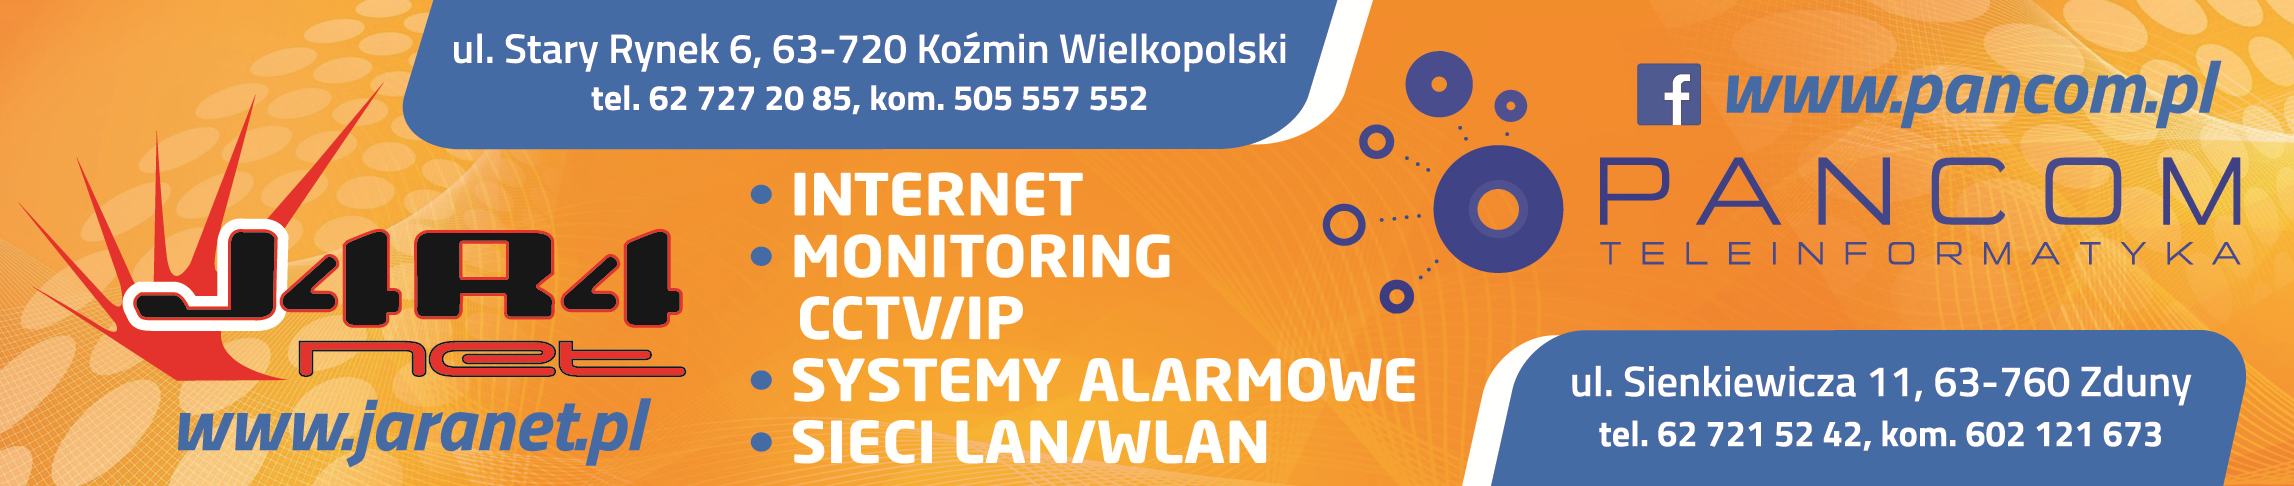 PHU JARANET Koźmin Wielkopolski Internet / Monitoring CCTV/IP / Systemy Alarmowe / Sieci LAN/WLAN